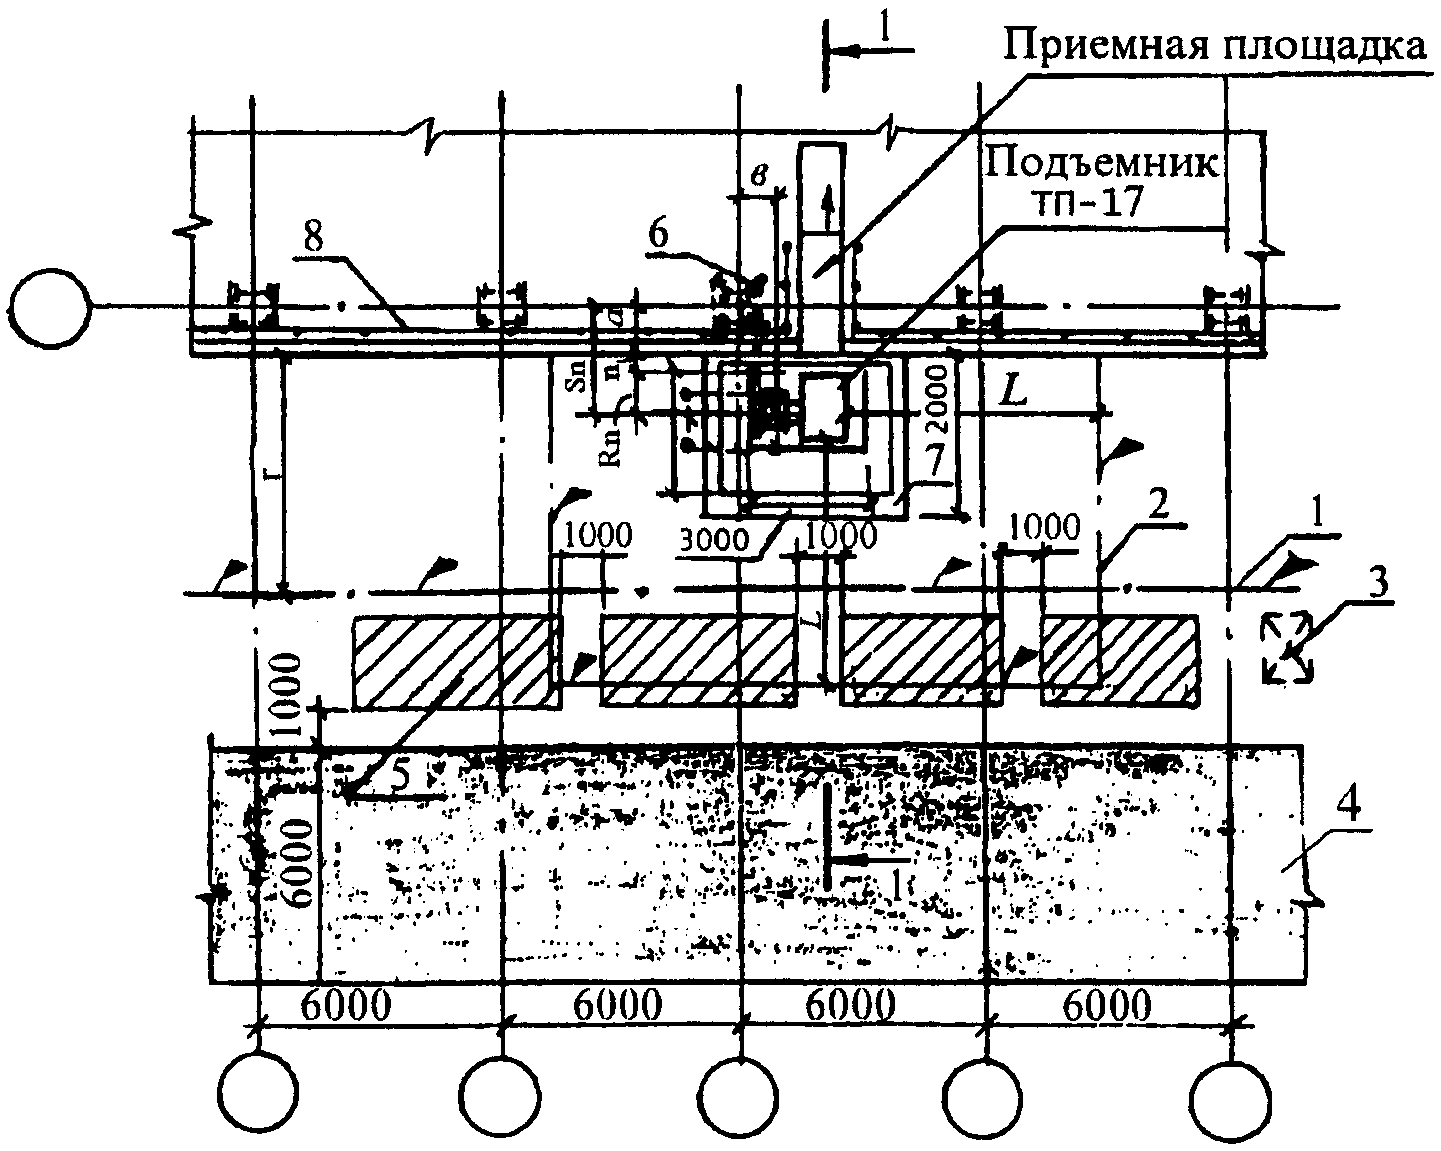 ПГПМ-4272 технические характеристики